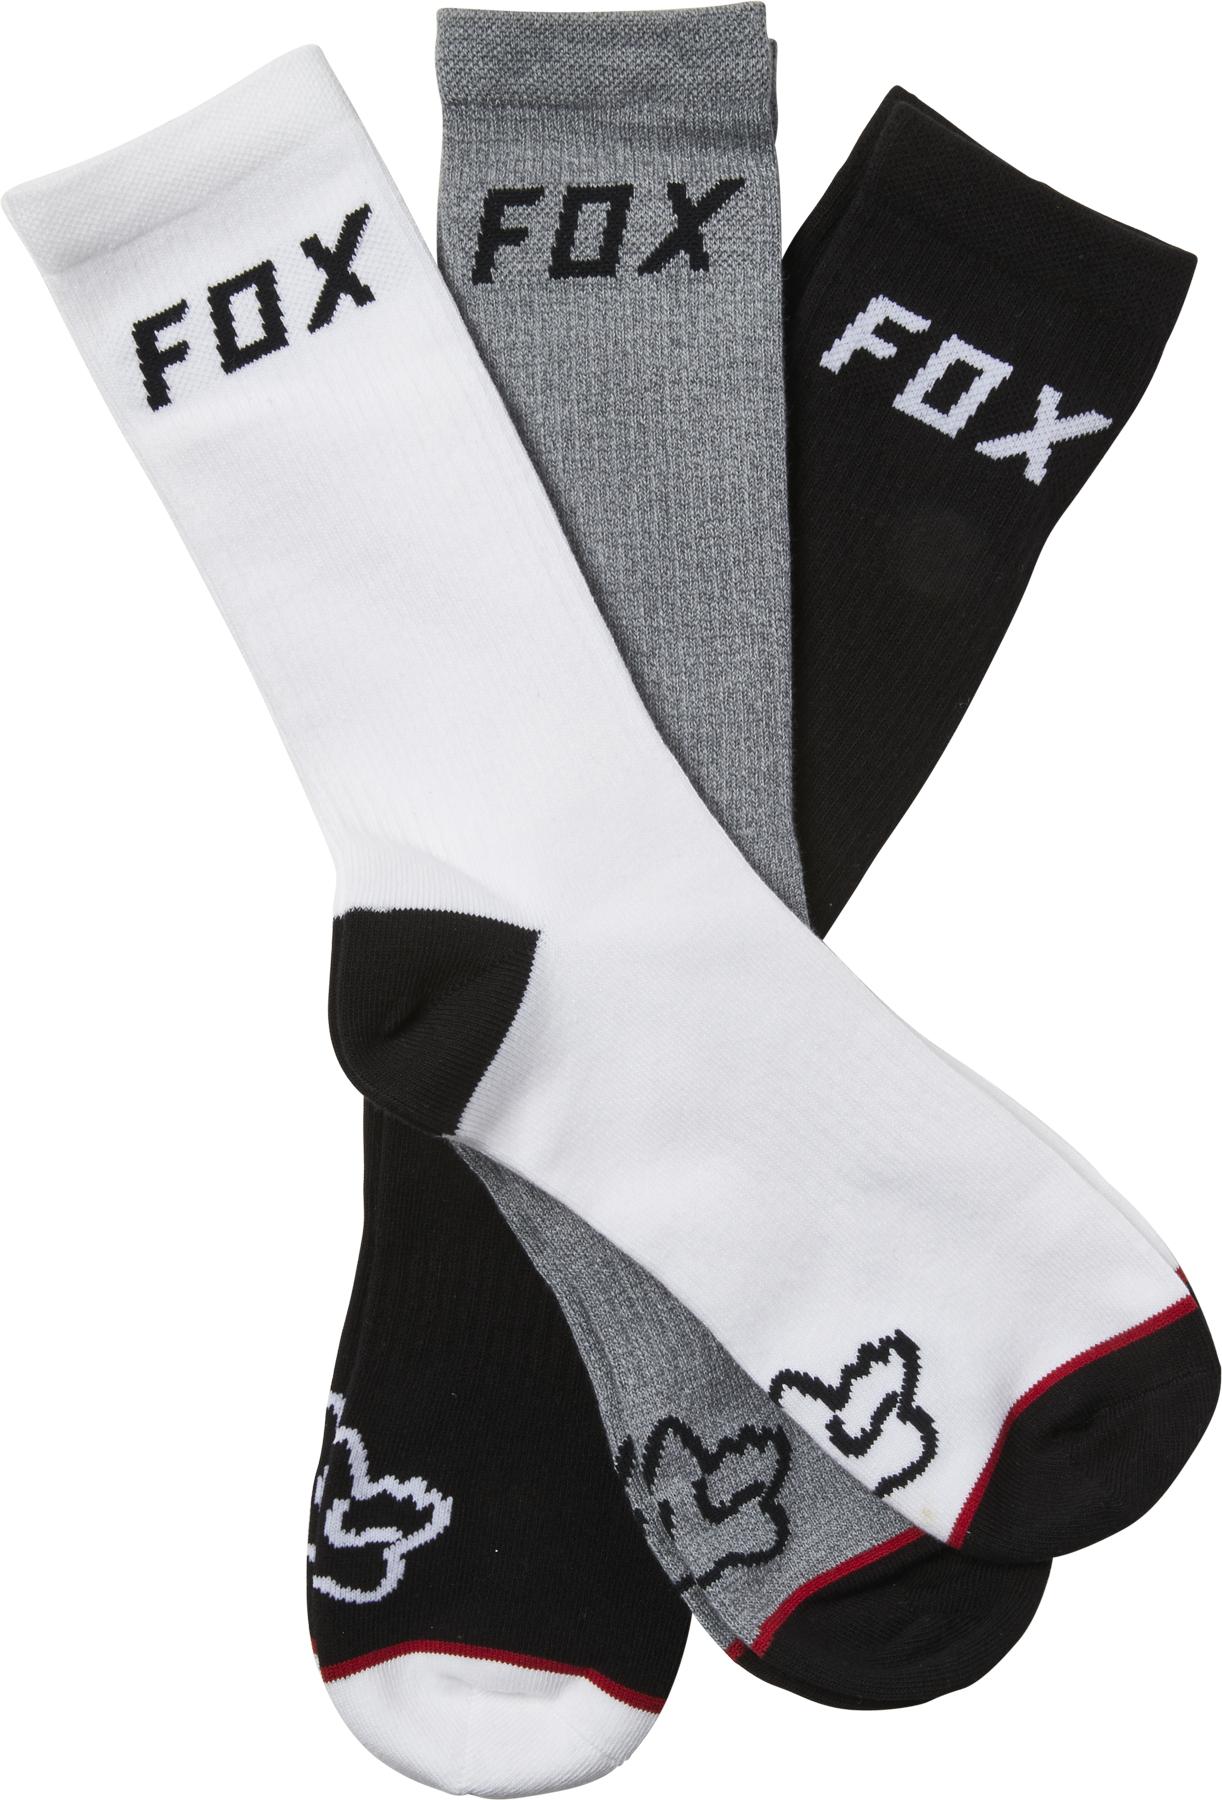 Fox Racing Fheadx Crew Sock 3 Pack - Assorted